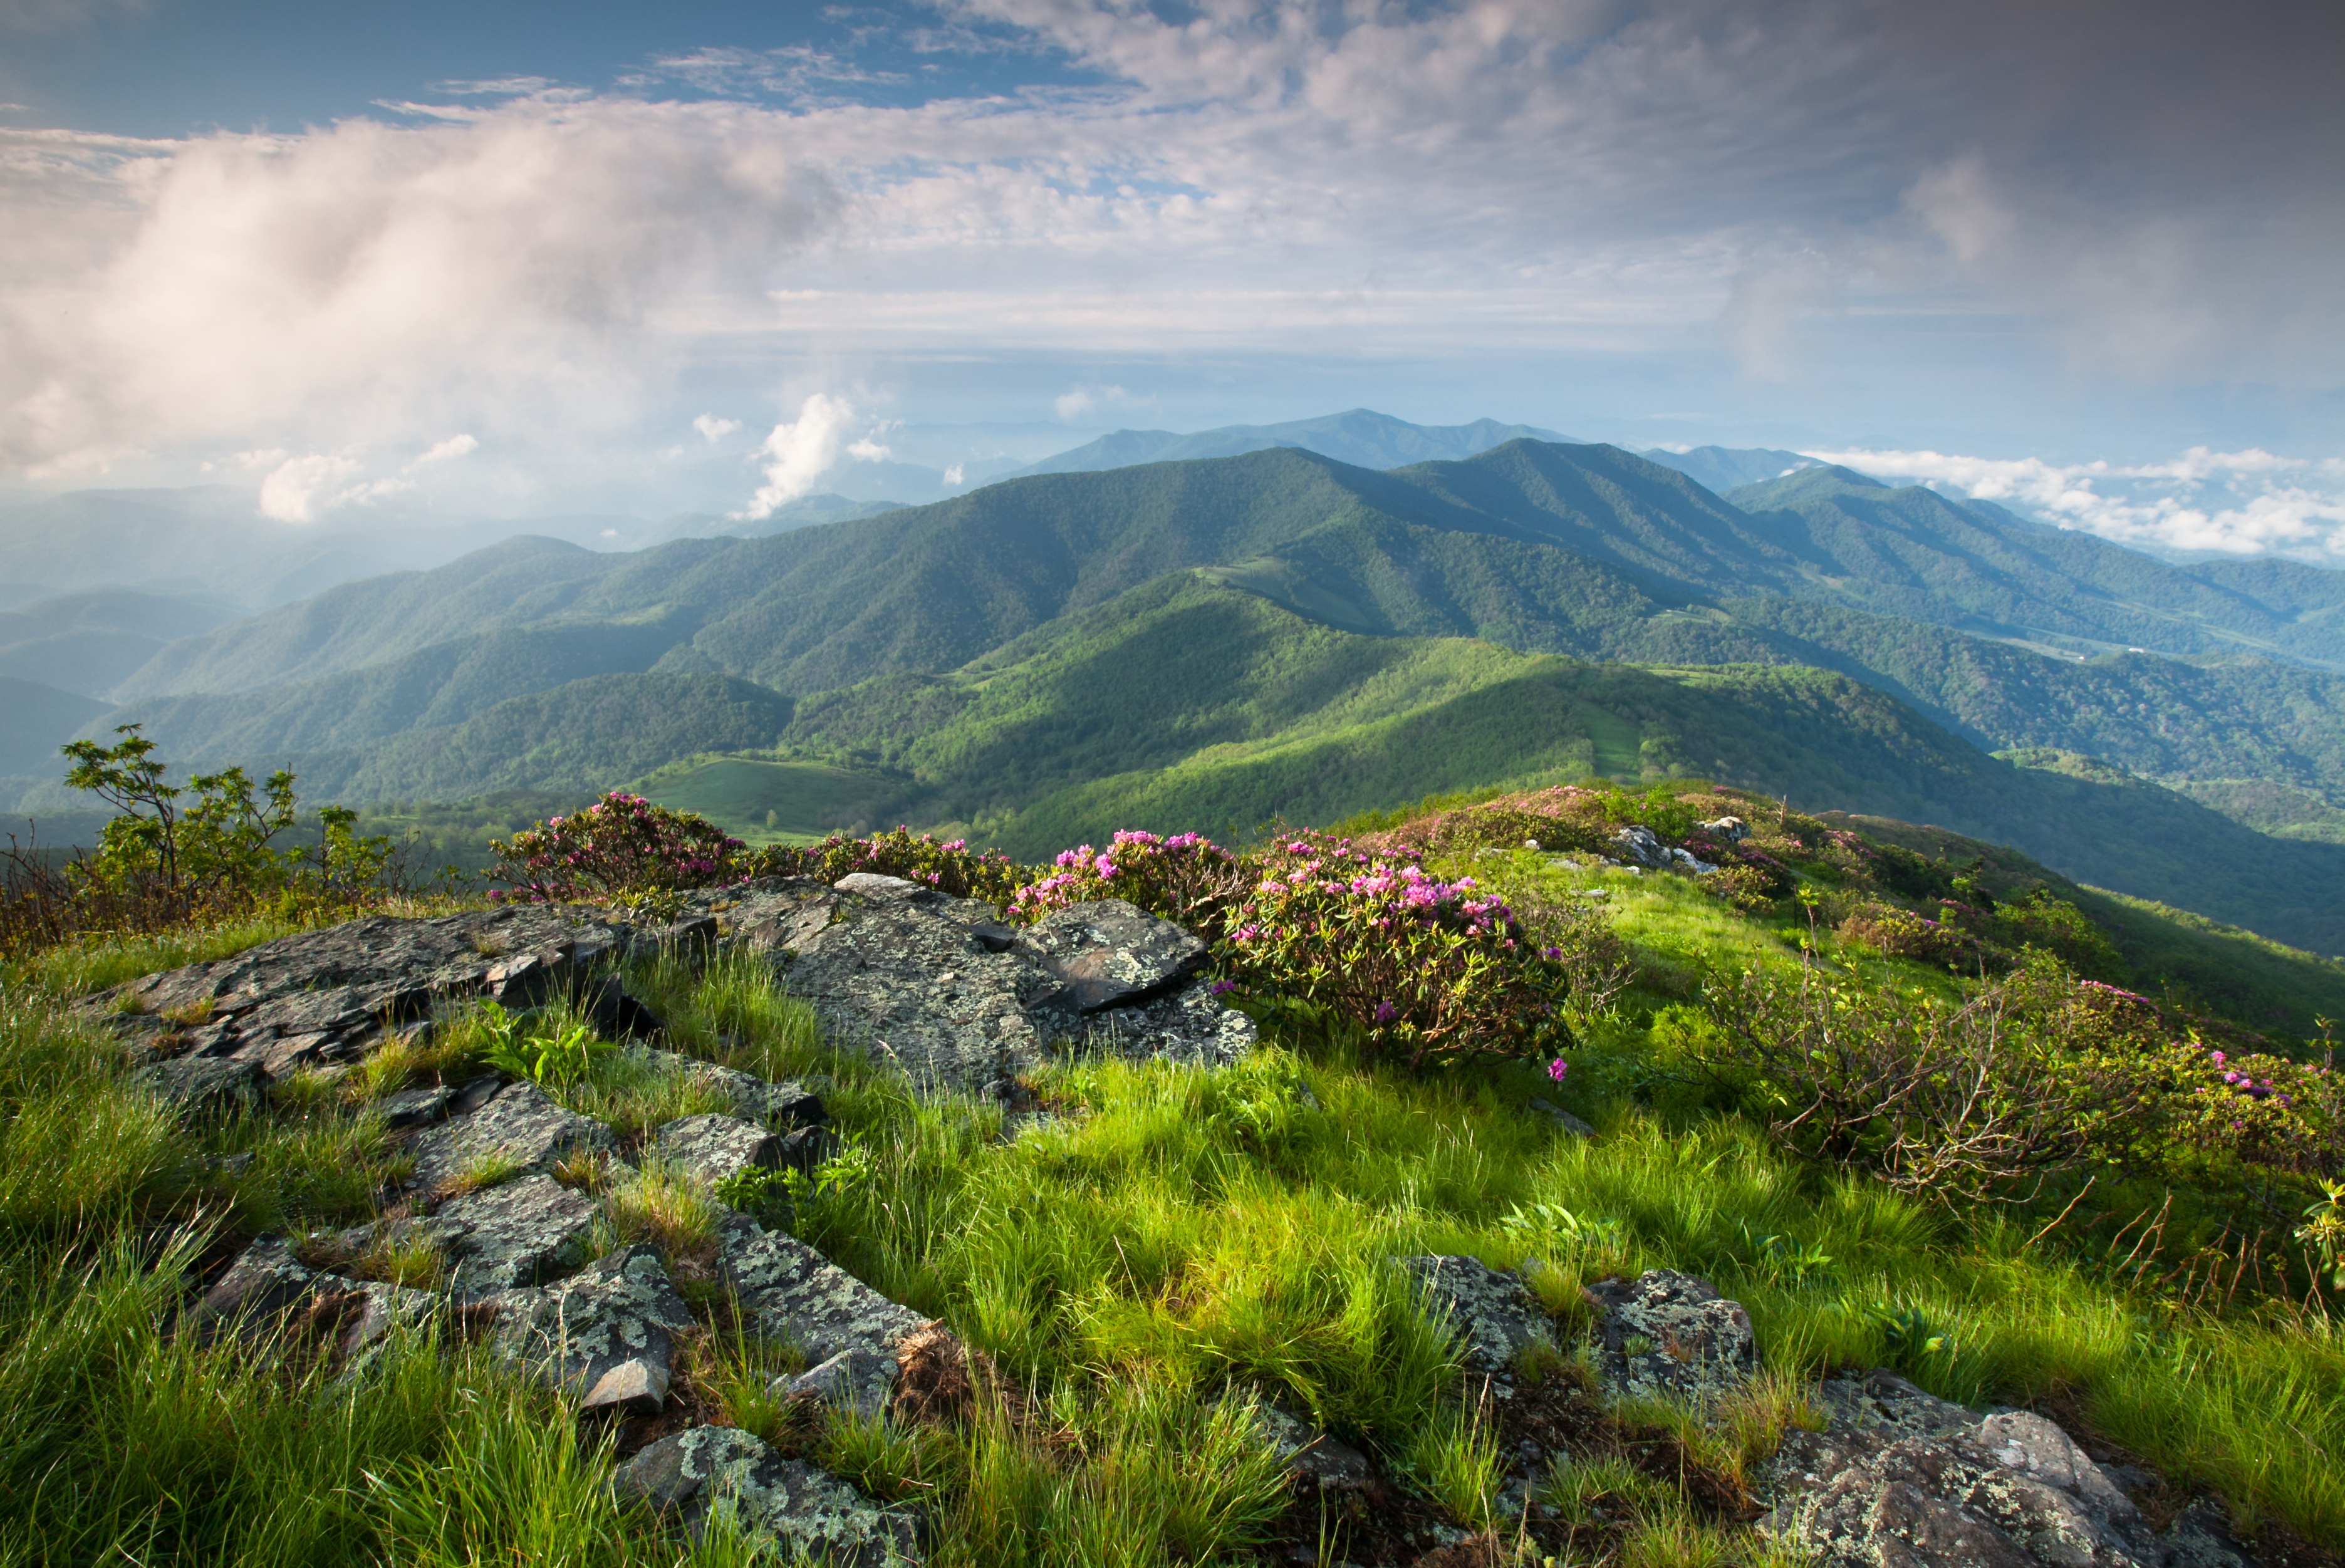 Blue Ridge Mountain landscape in North Carolina | Source: Shutterstock